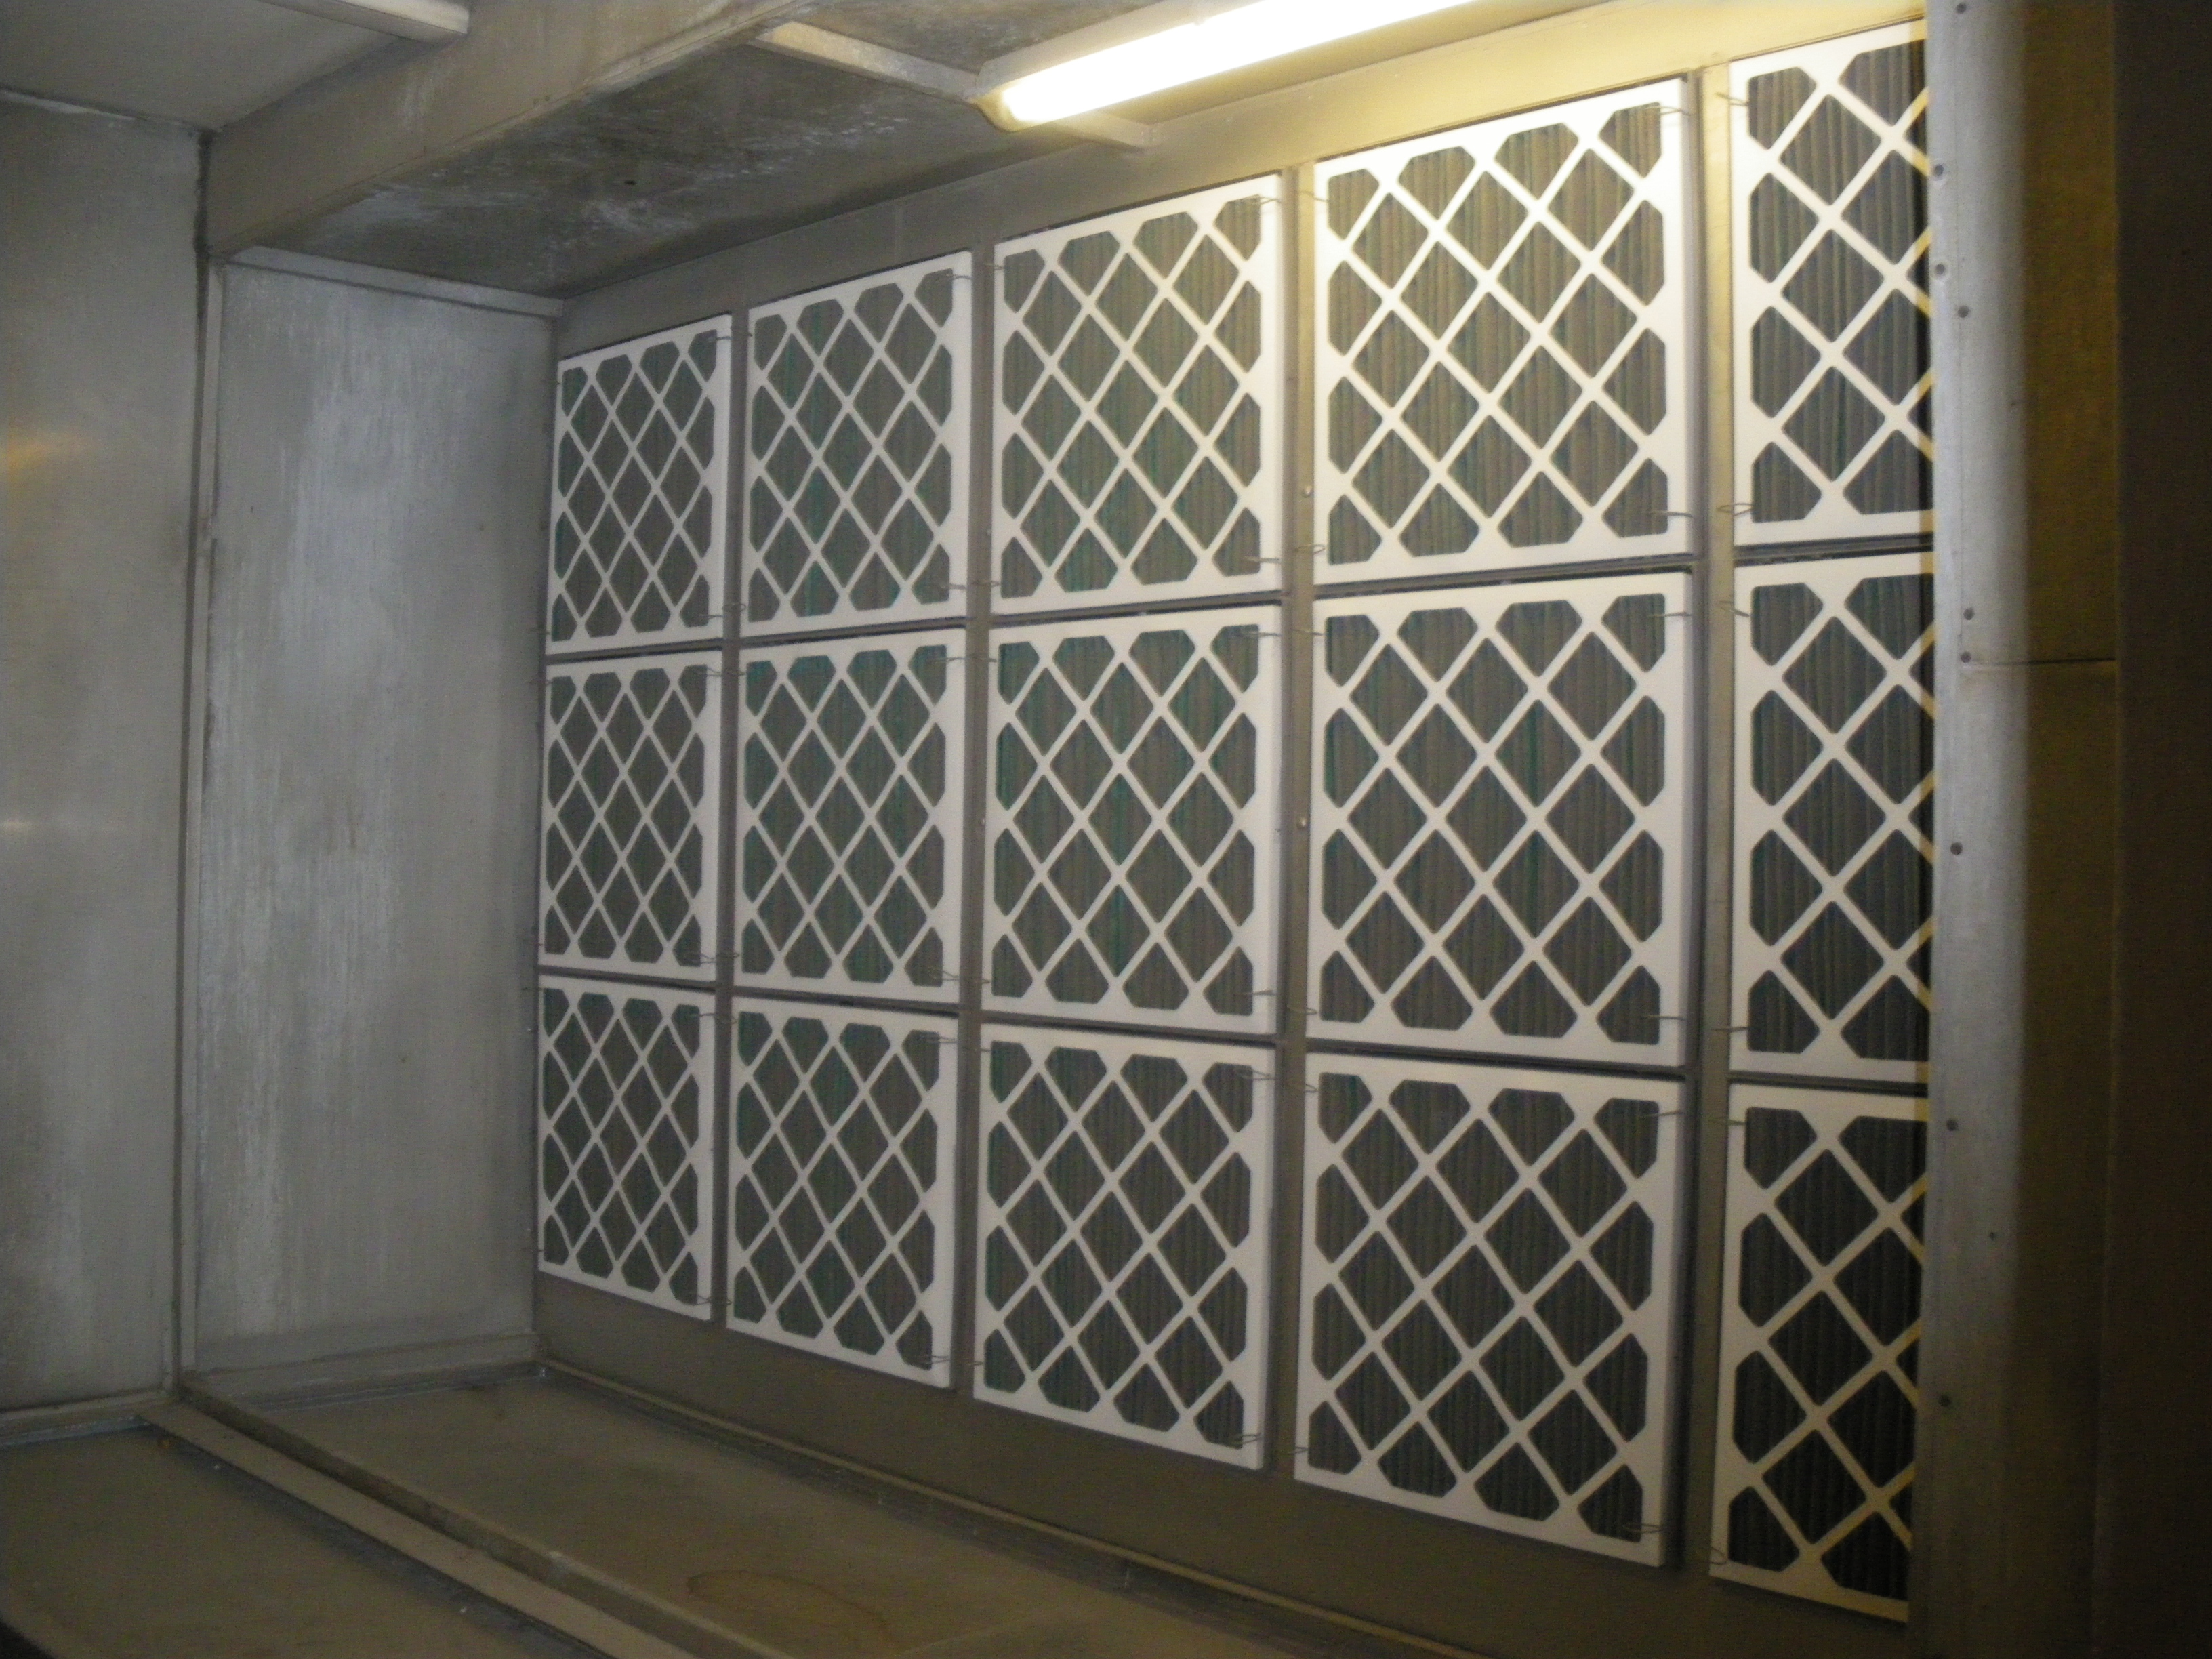 Print Floor ventilation plant - pleated air filters